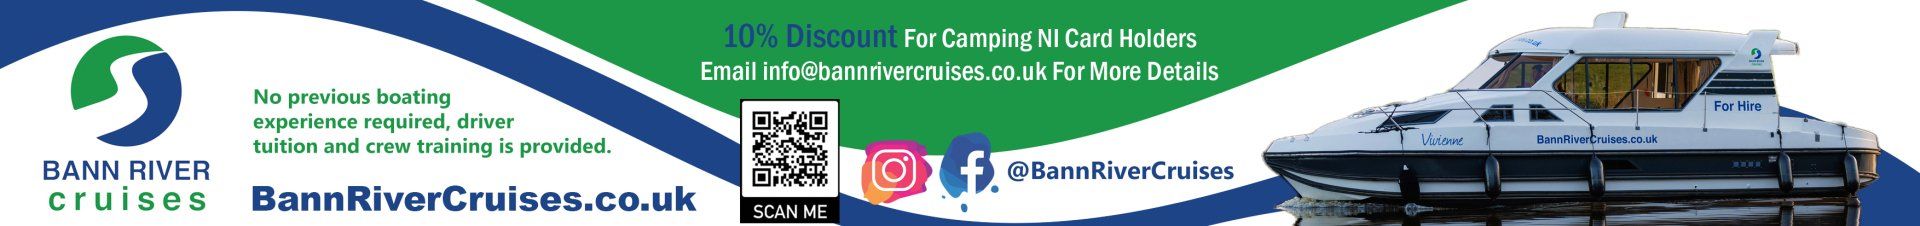 Bann River Cruises CampingNI